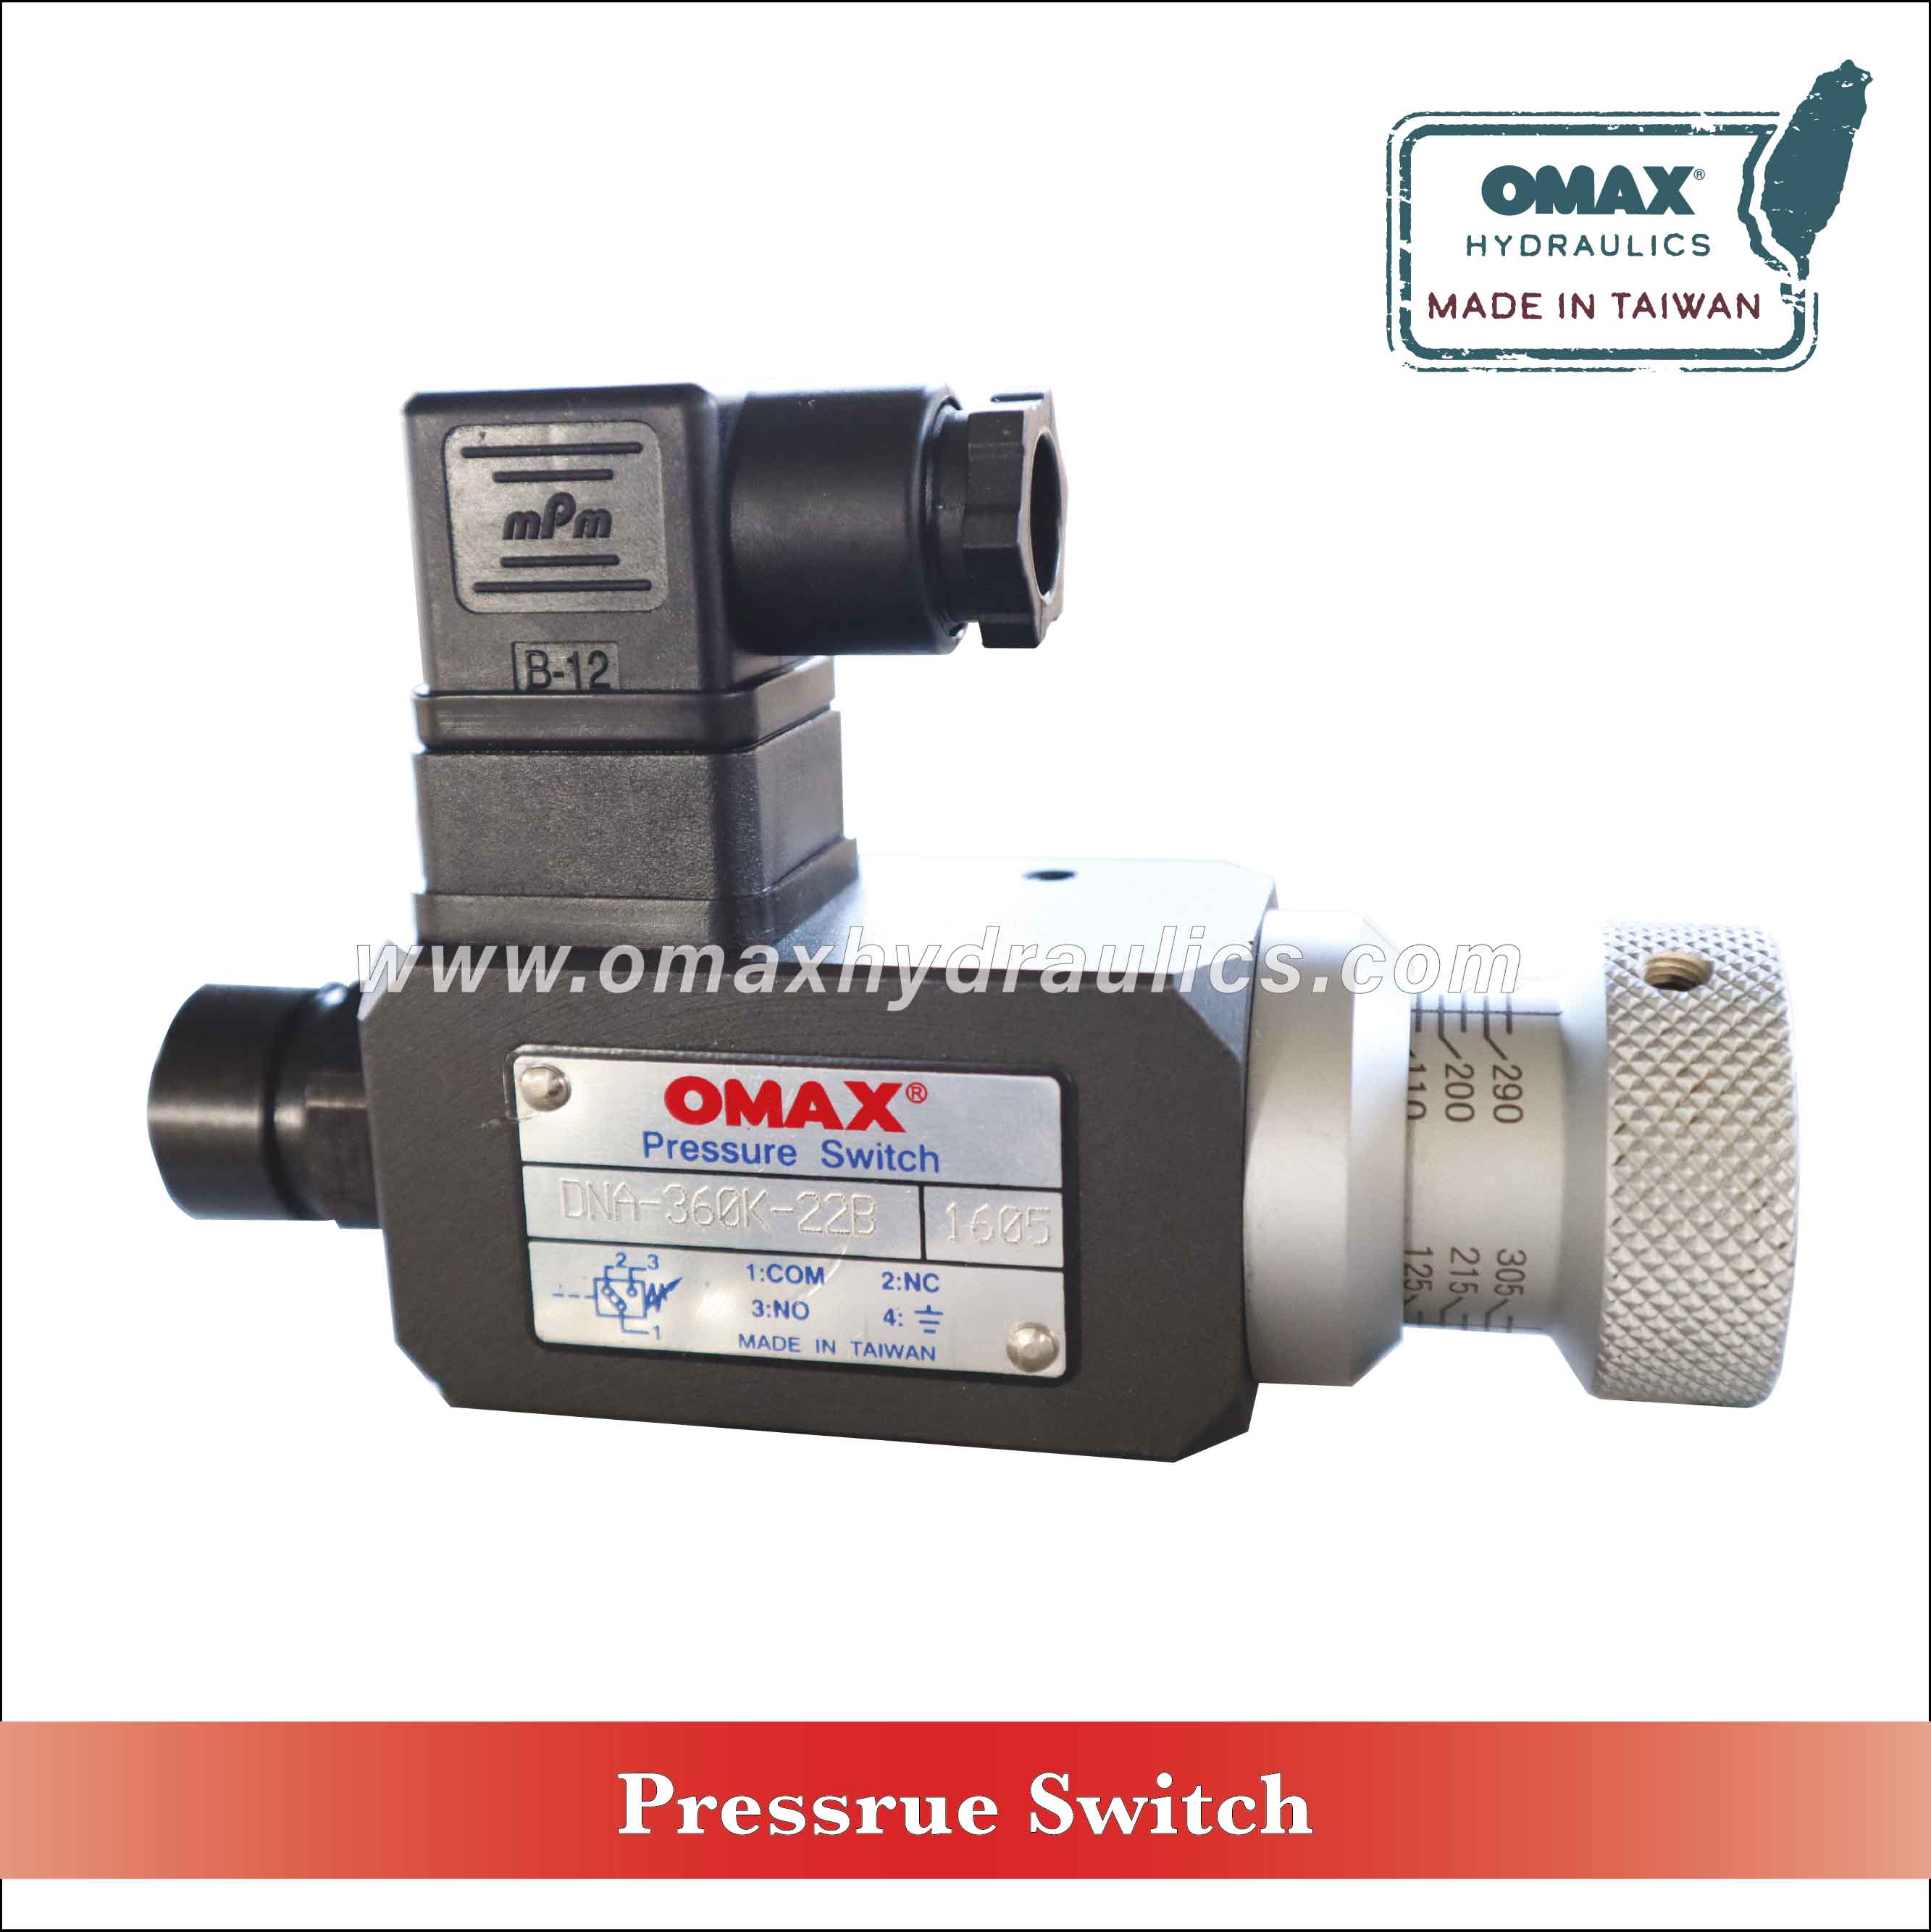 BAOSHISHAN Hydraulic Pressure Switch DNA-040K-06i Air Pressure Relay Switch 